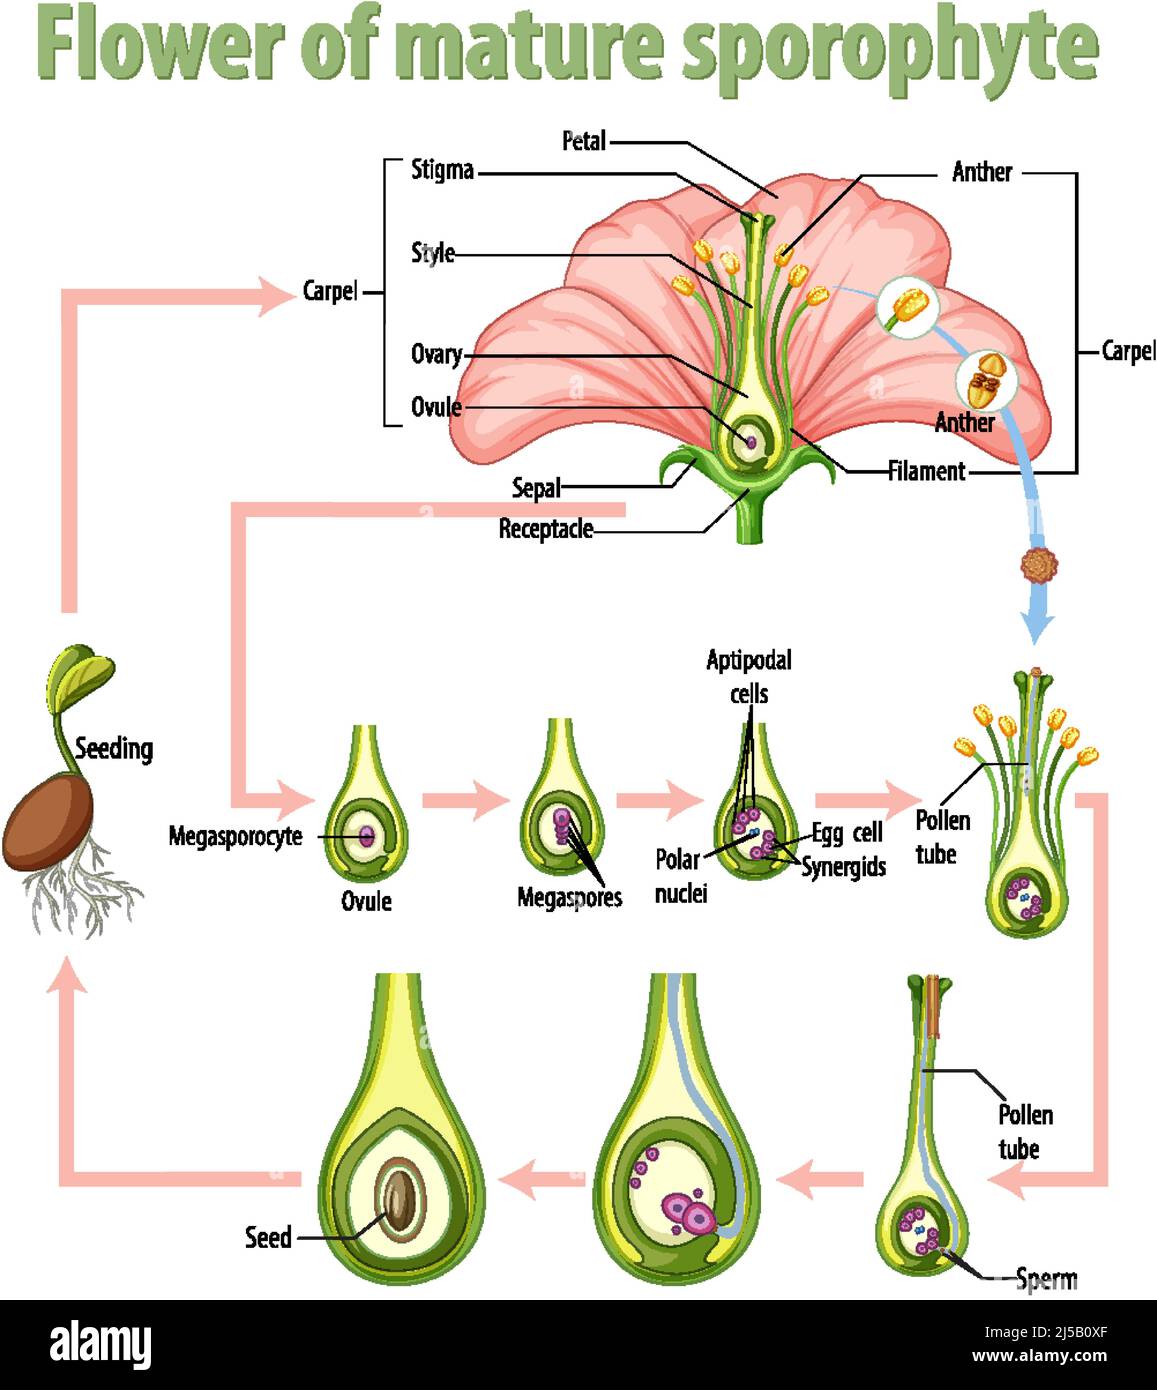 Diagram showing flower of mature sporophyte illustration Stock Vector